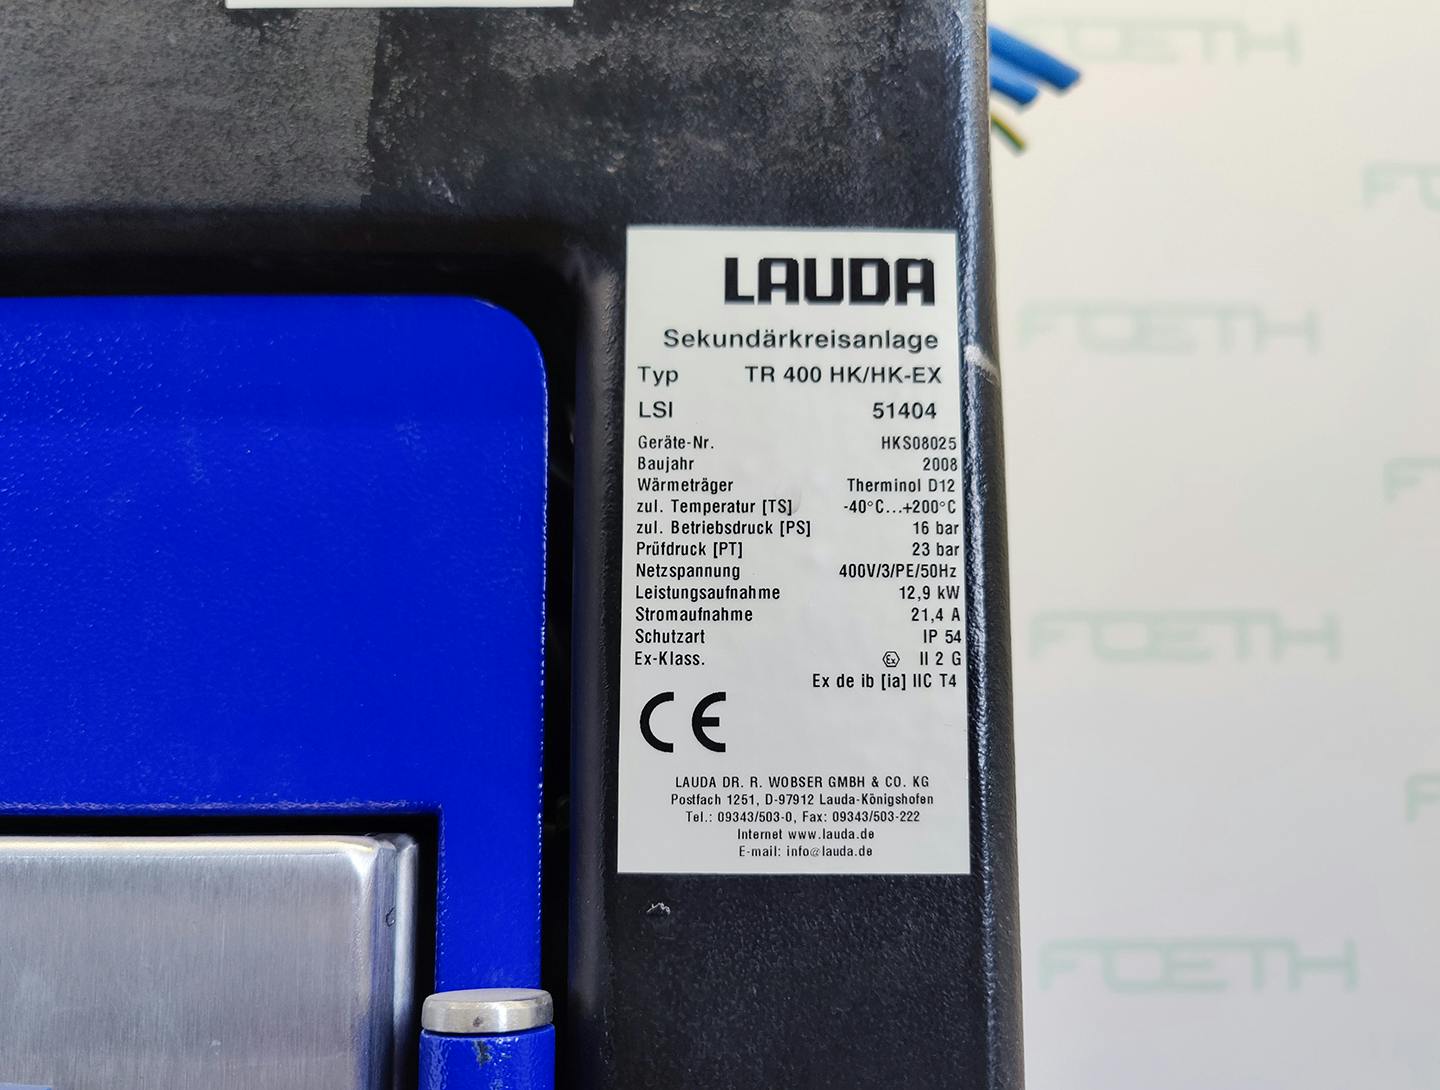 Lauda TR400 HK/HK-EX "secondary circuit system" - циркуляционный термостат - image 13